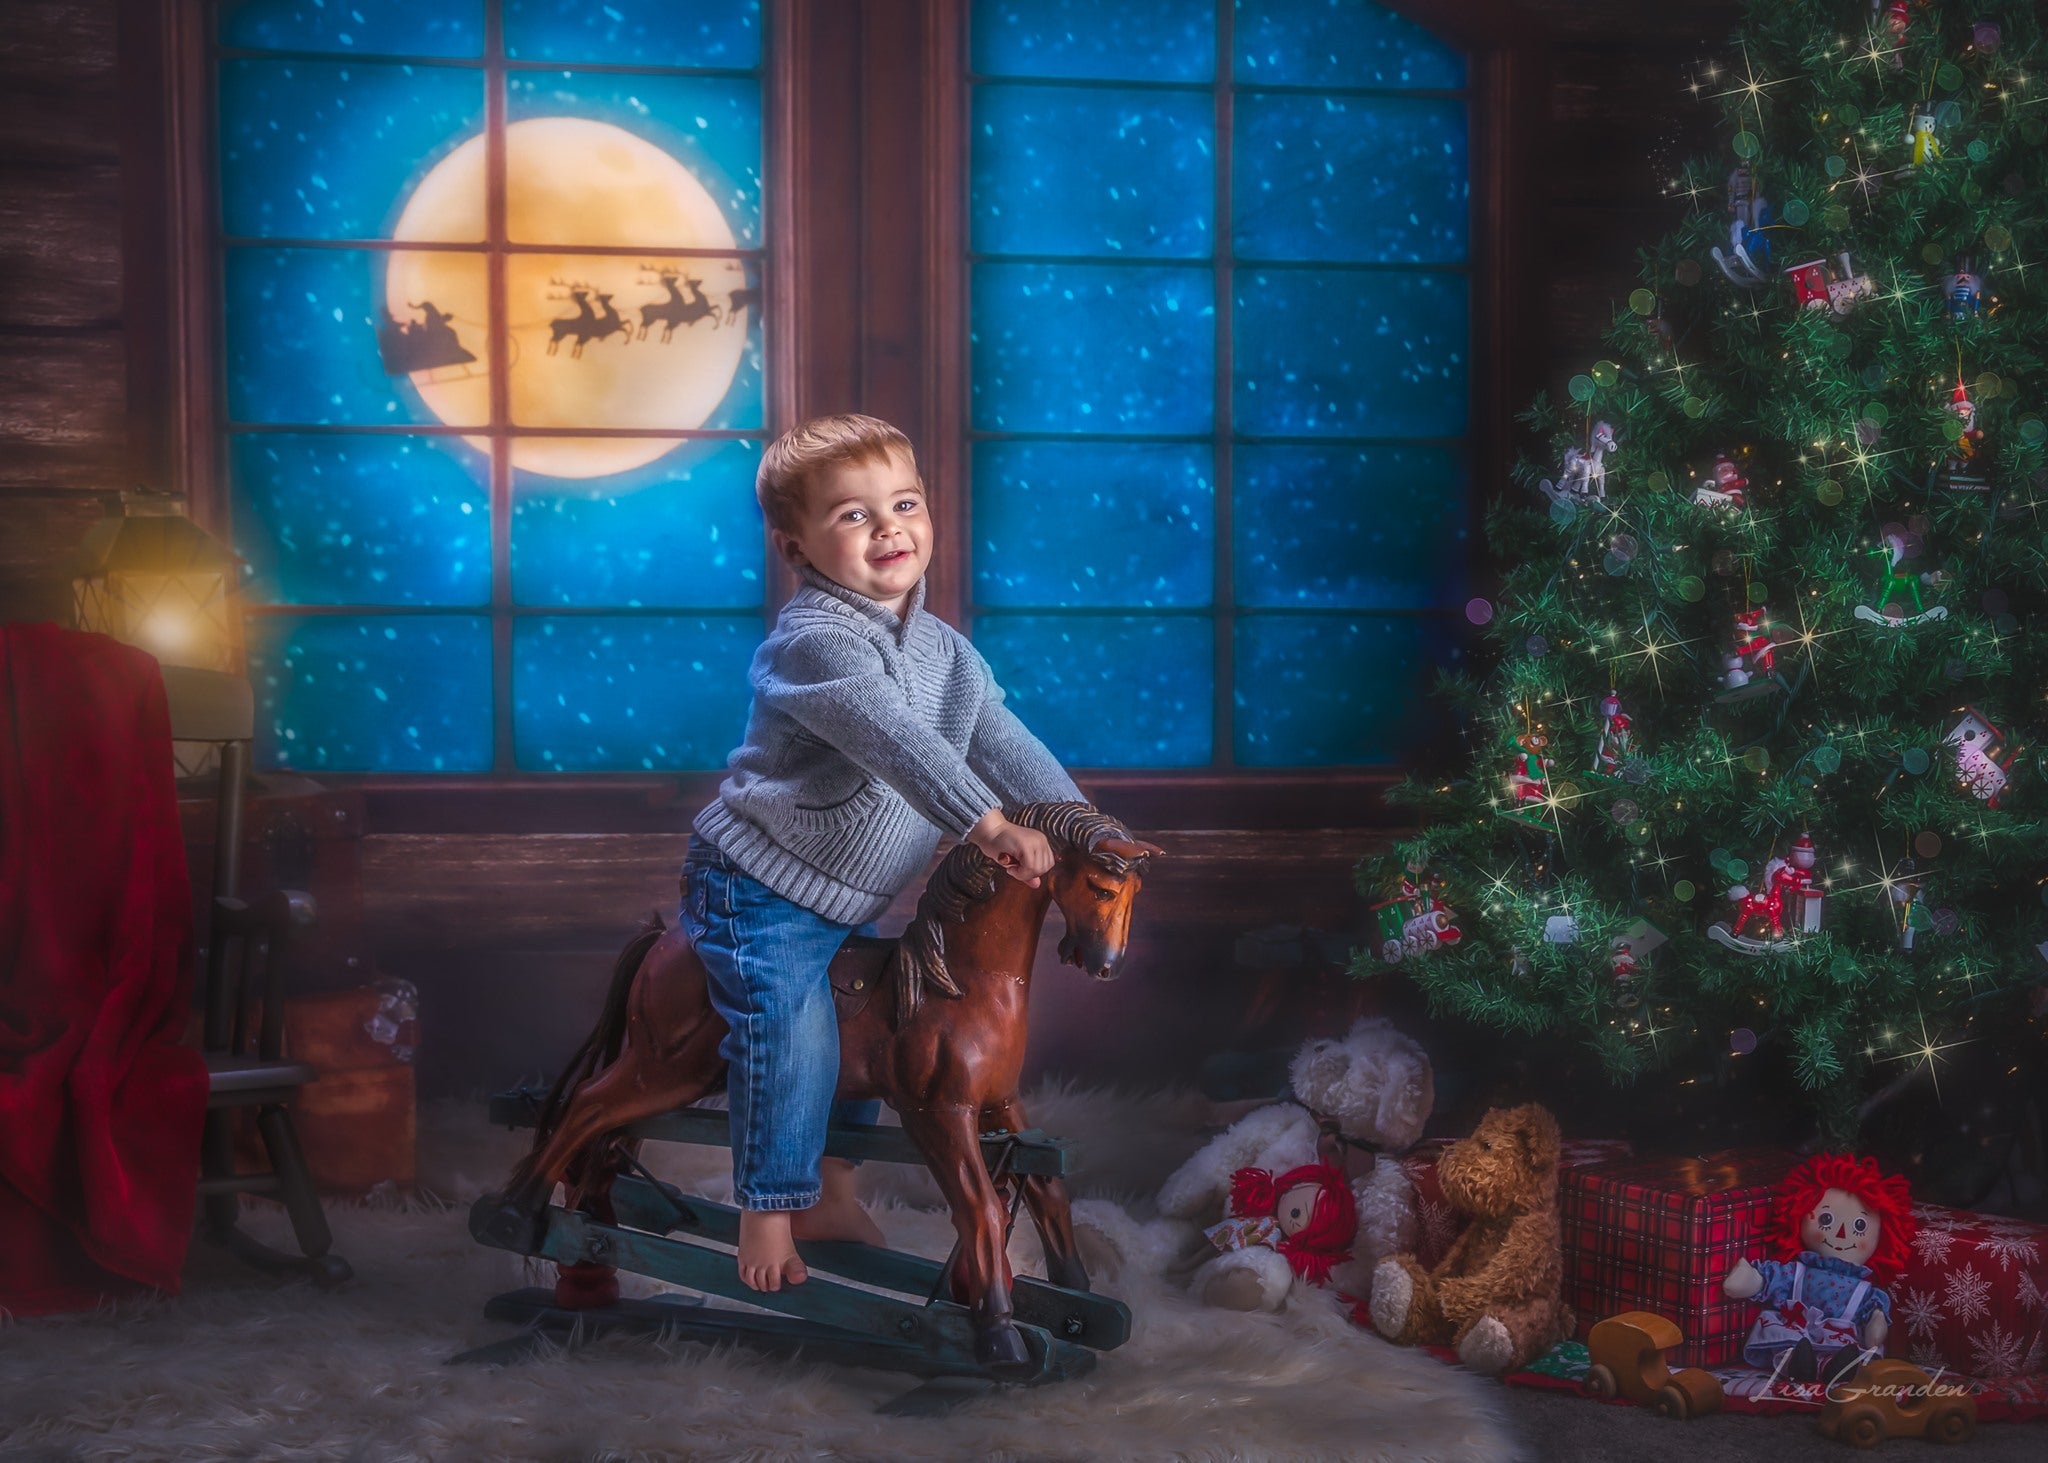 Kate Christmas Tree Santa Backdrop for Photography Designed by Lisa Granden